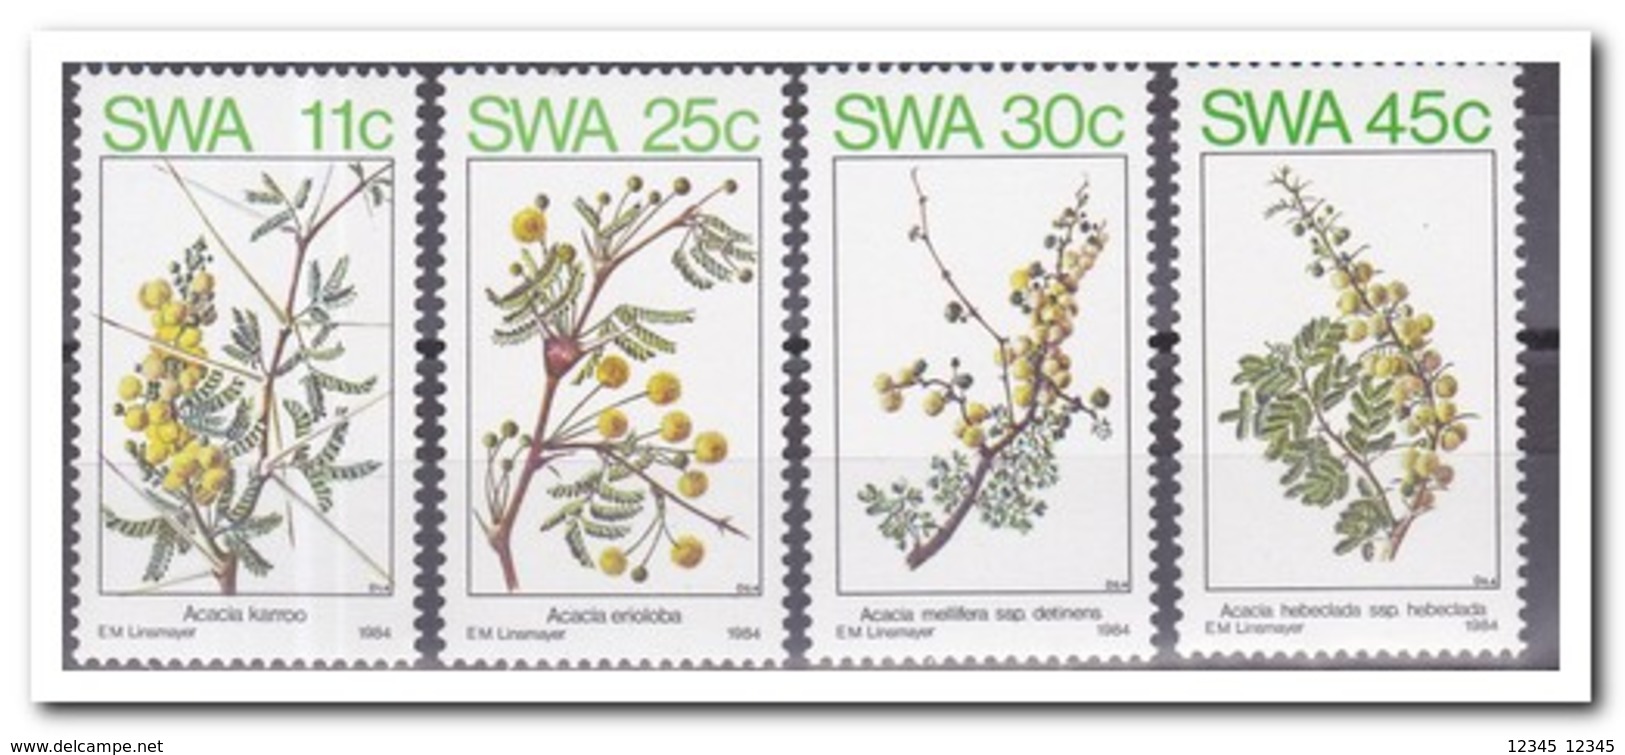 SWA Zuid West Afrika 1984, Postfris MNH, Plants - Africa (Varia)